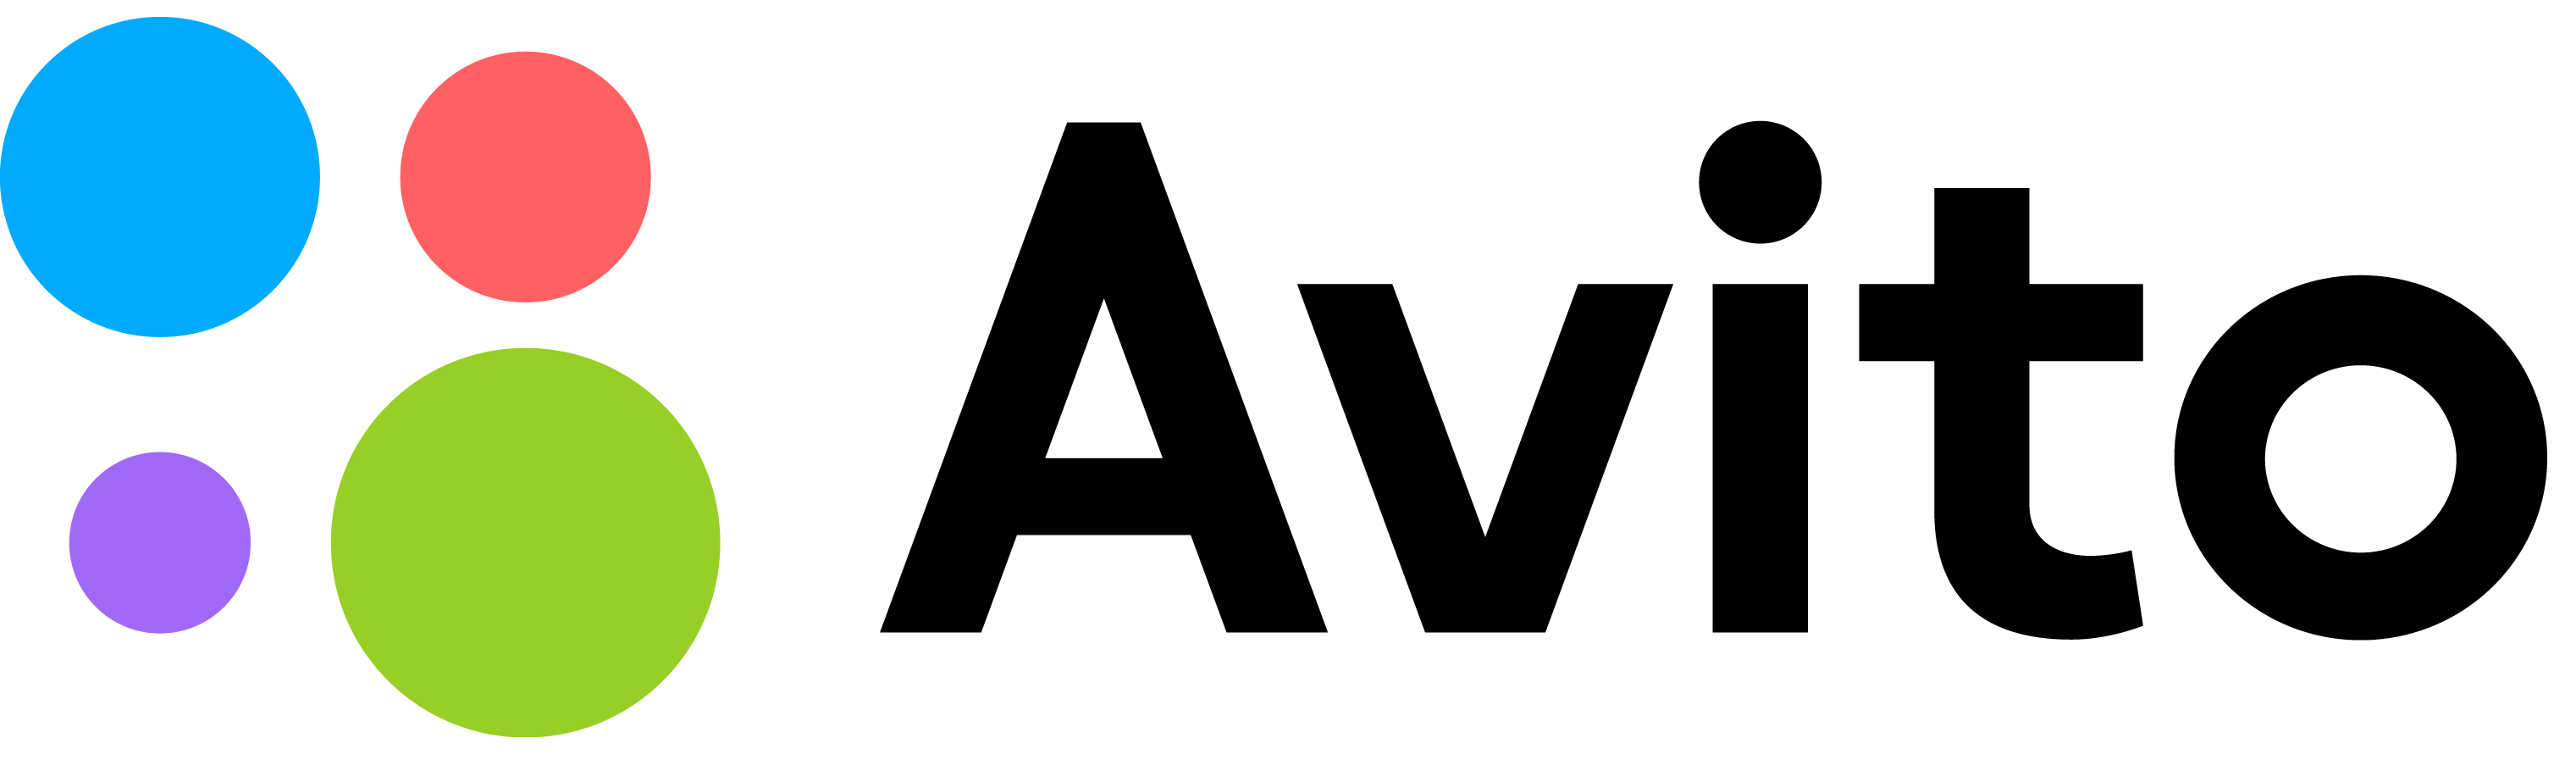 Авито россия новые. Авито логотип. Авито картинка. Avito иконка. Avito значок.